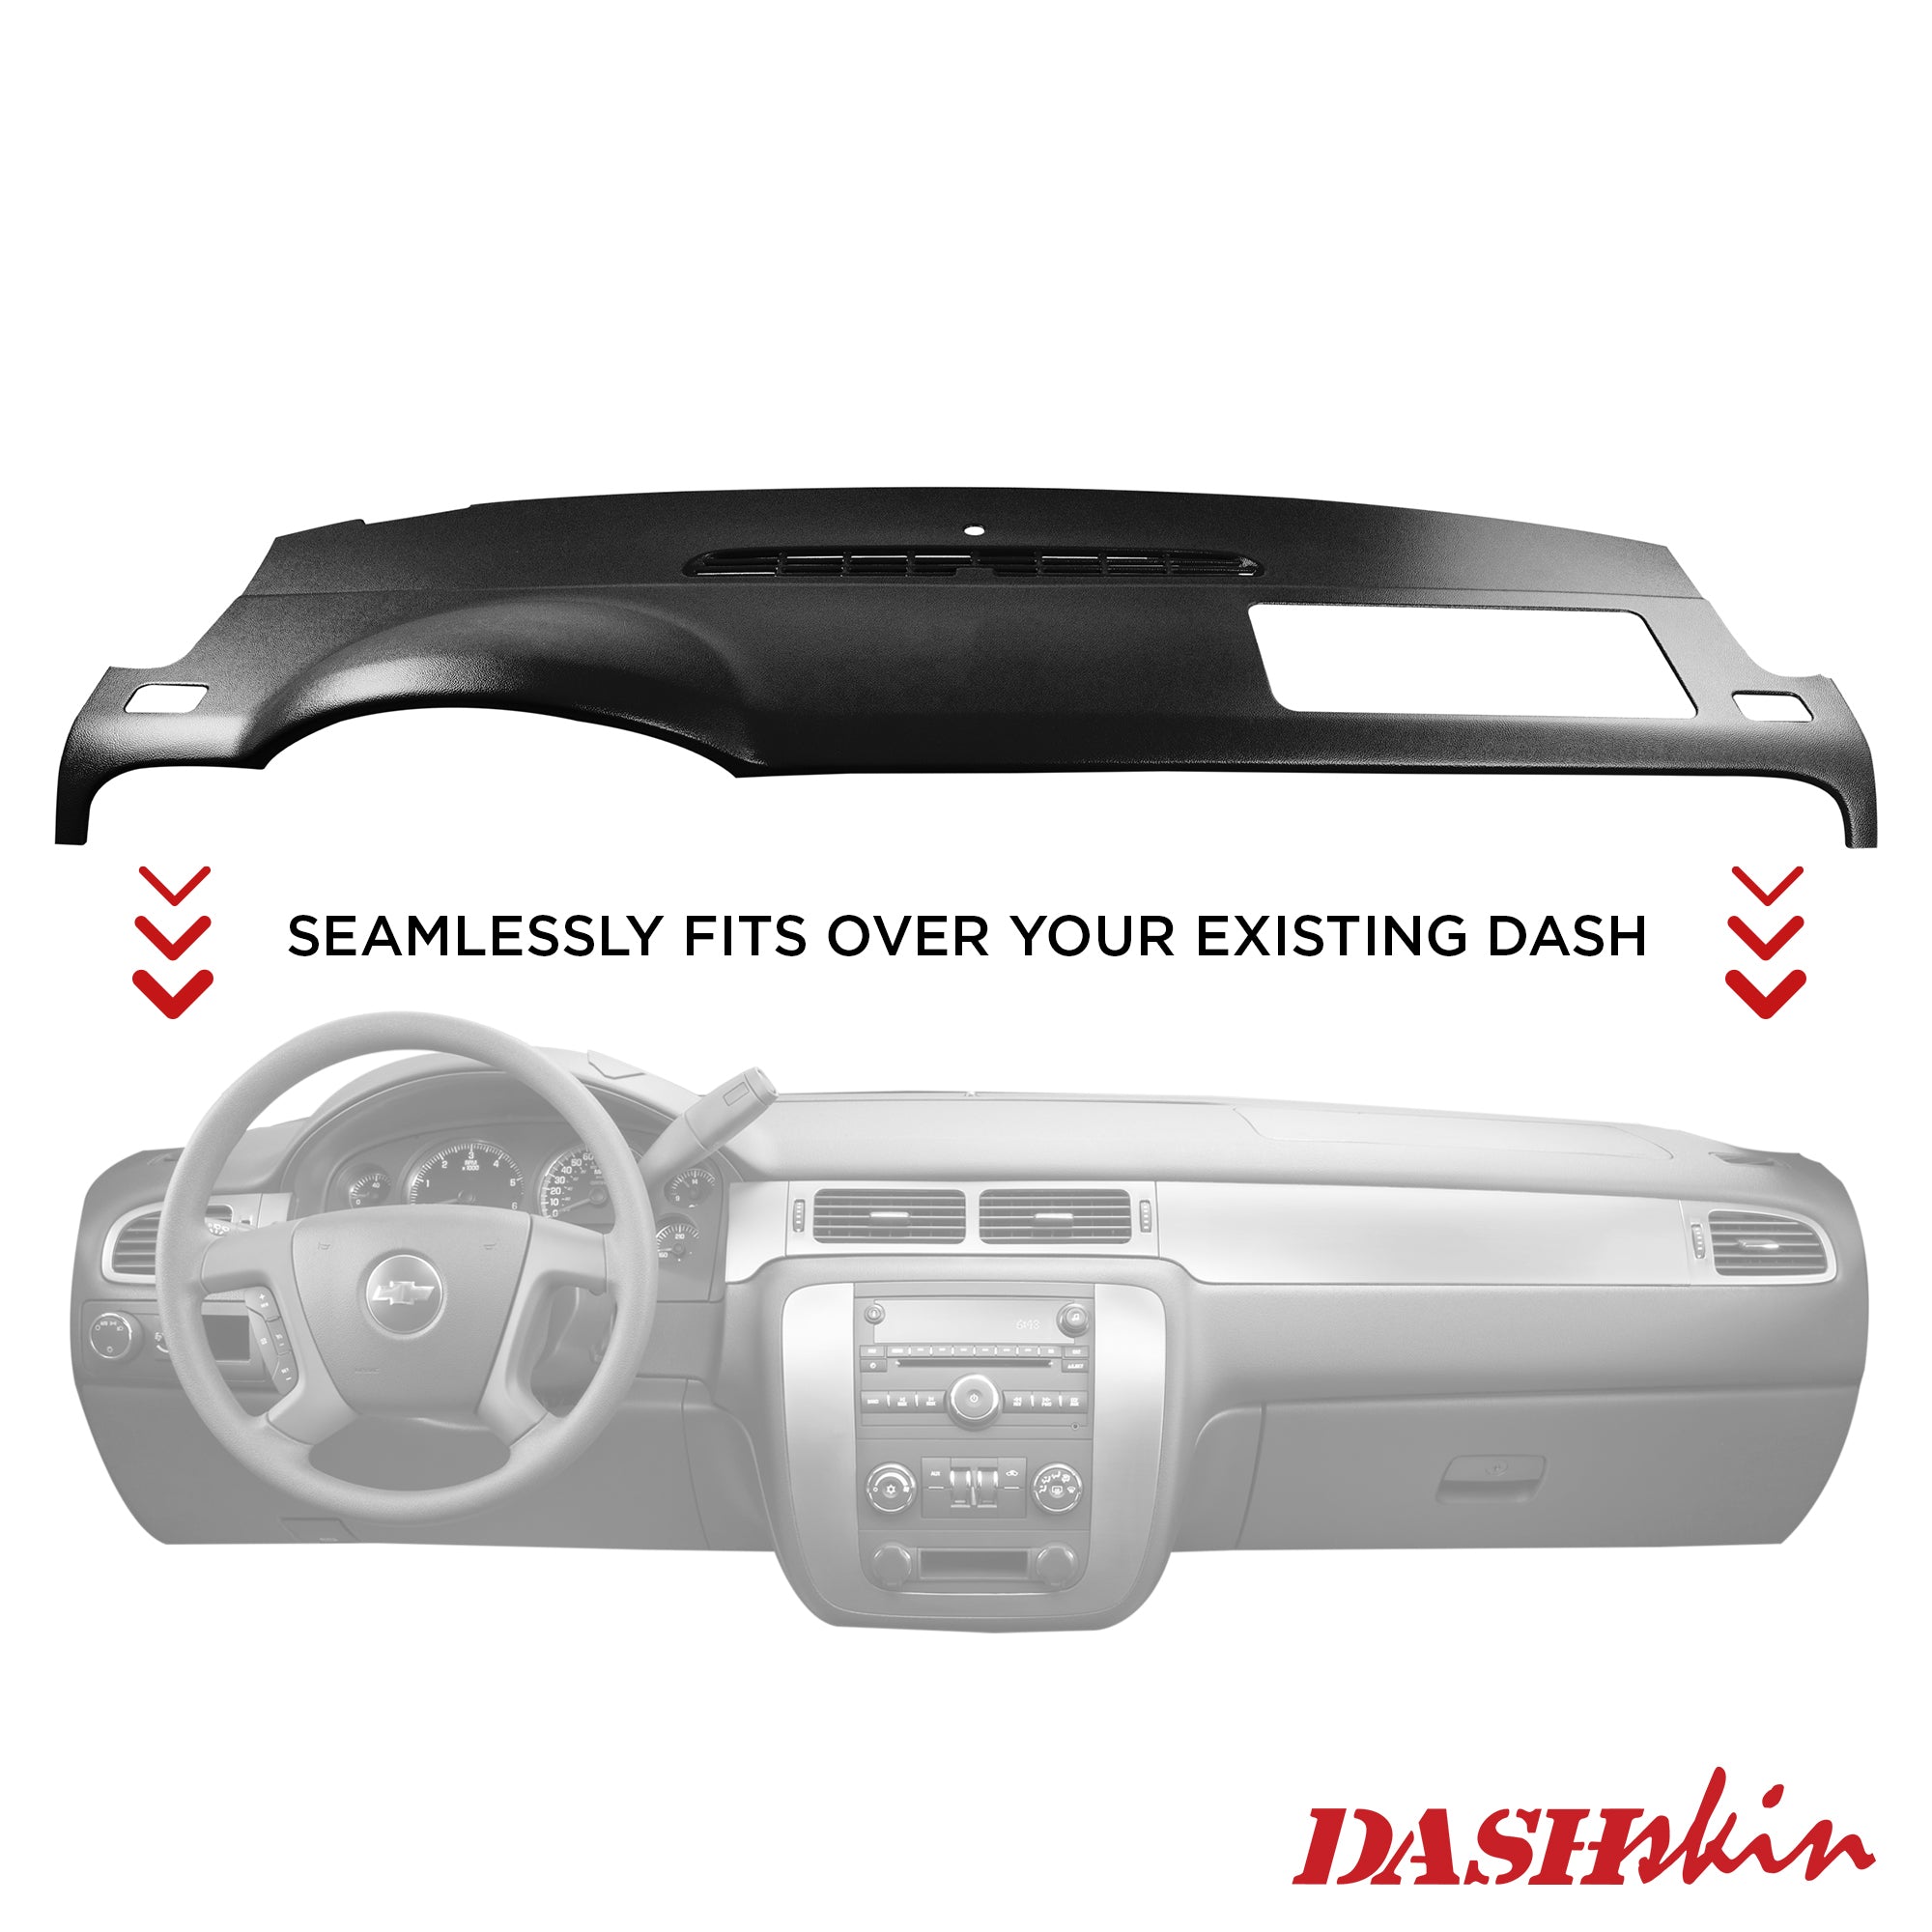 DashSkin dashboard covers for Chevrolet vehicles